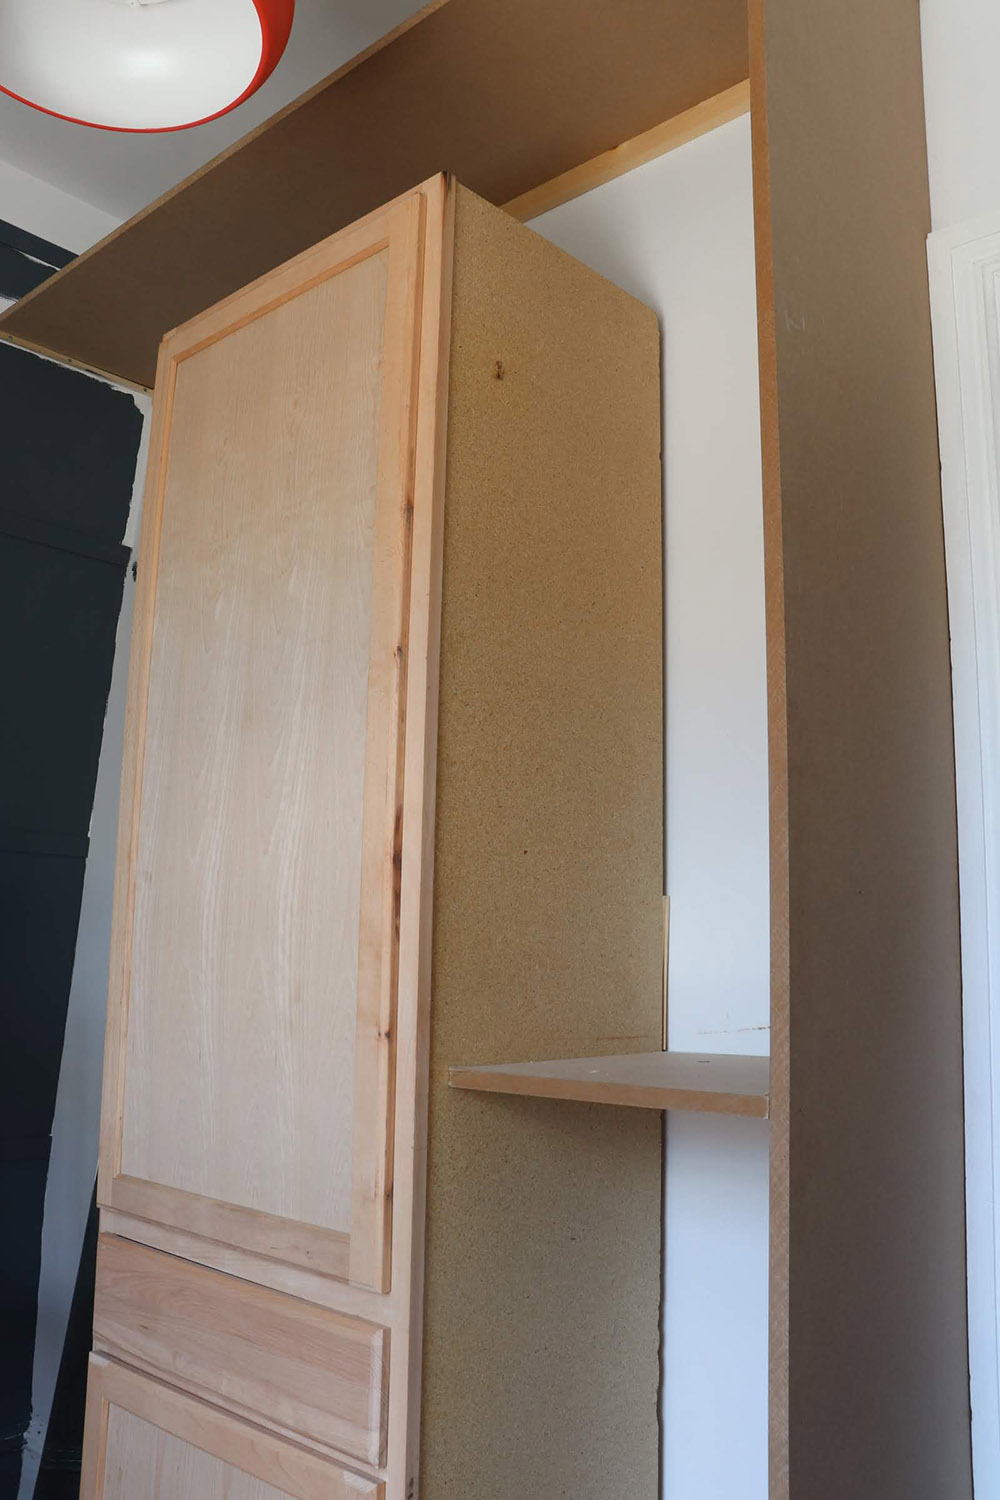 A custom wood closet frame